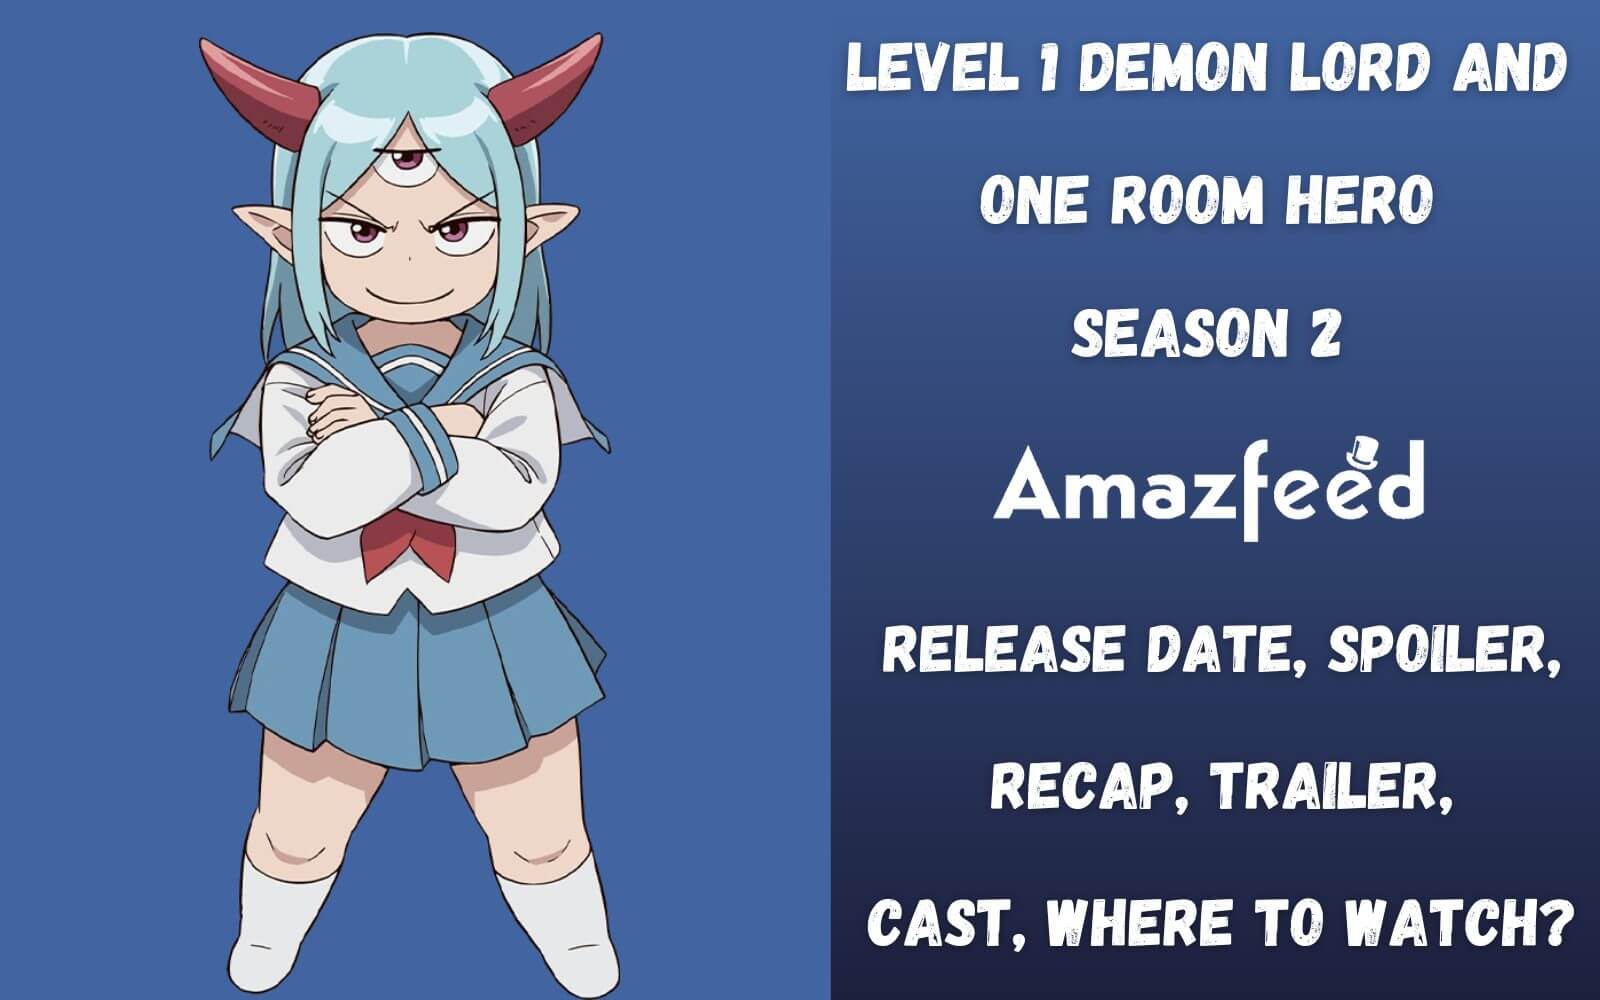 Prime Video: Level 1 Demon Lord & One Room Hero - Season 1